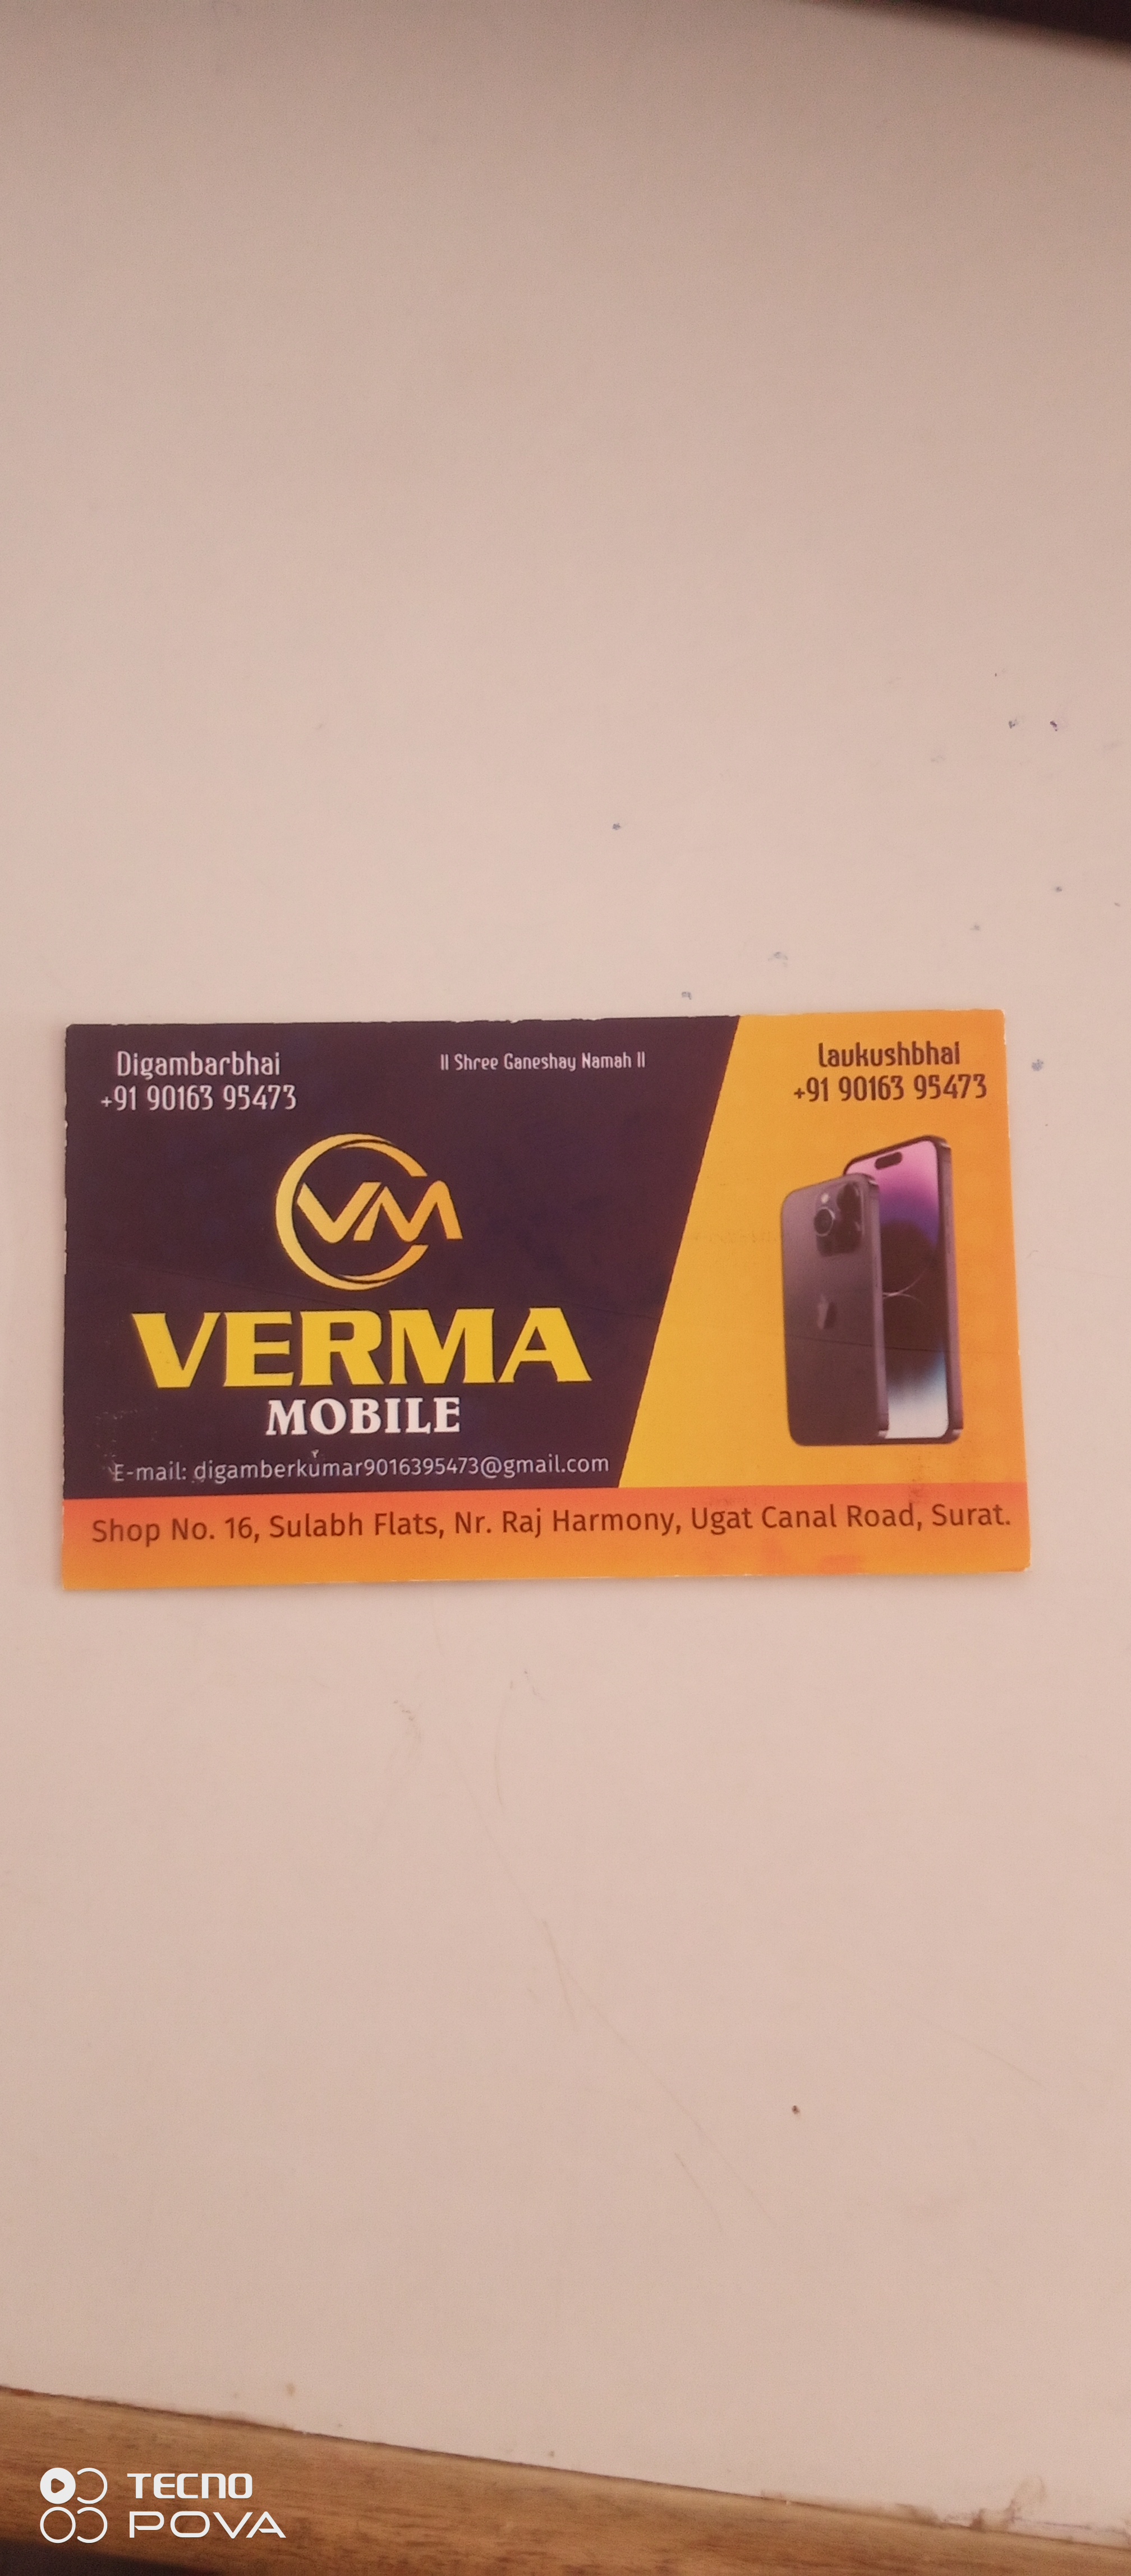 Verma mobile